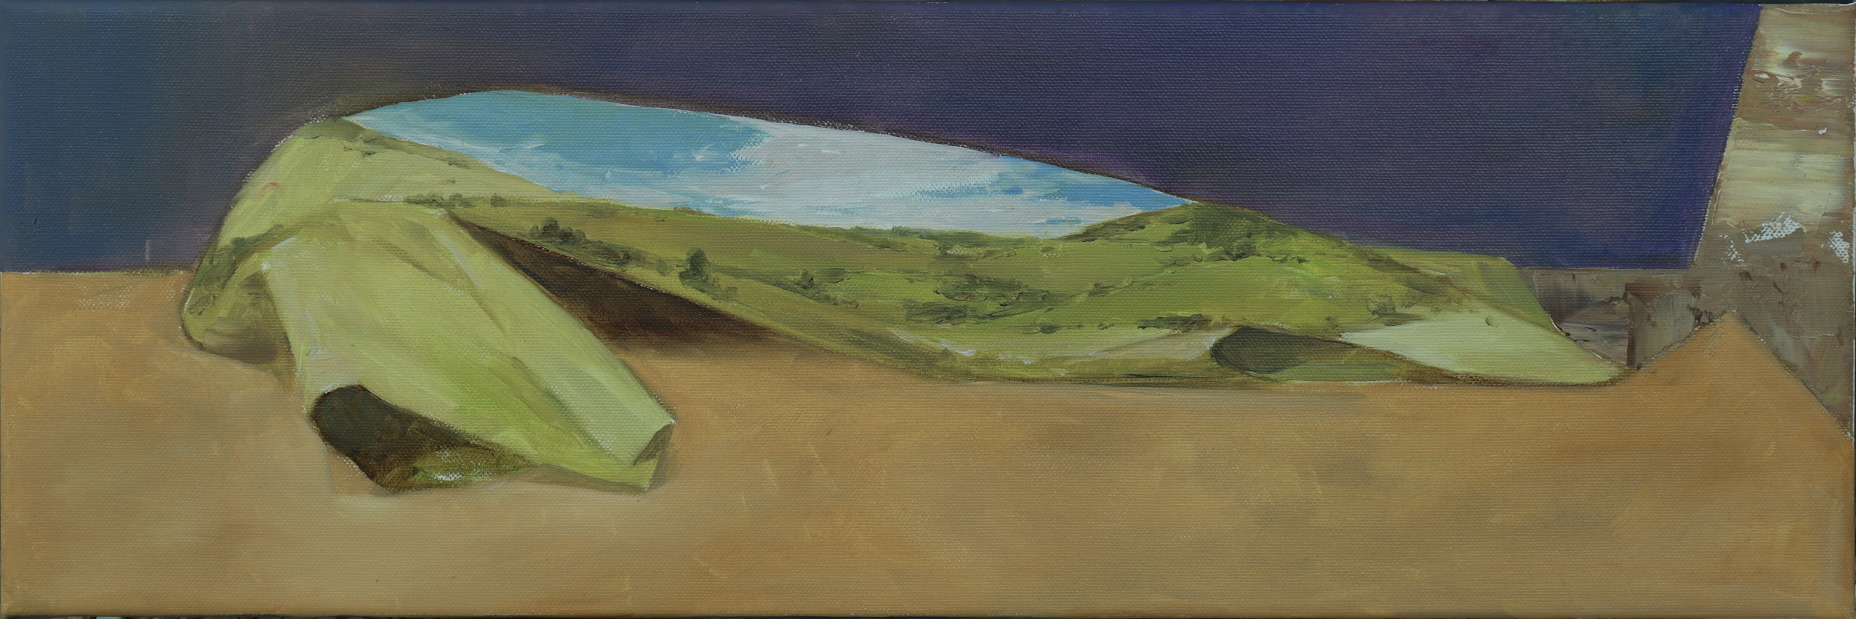 Létrészlet / Piece of Existence,oil on canvas20 x 60 cm2022